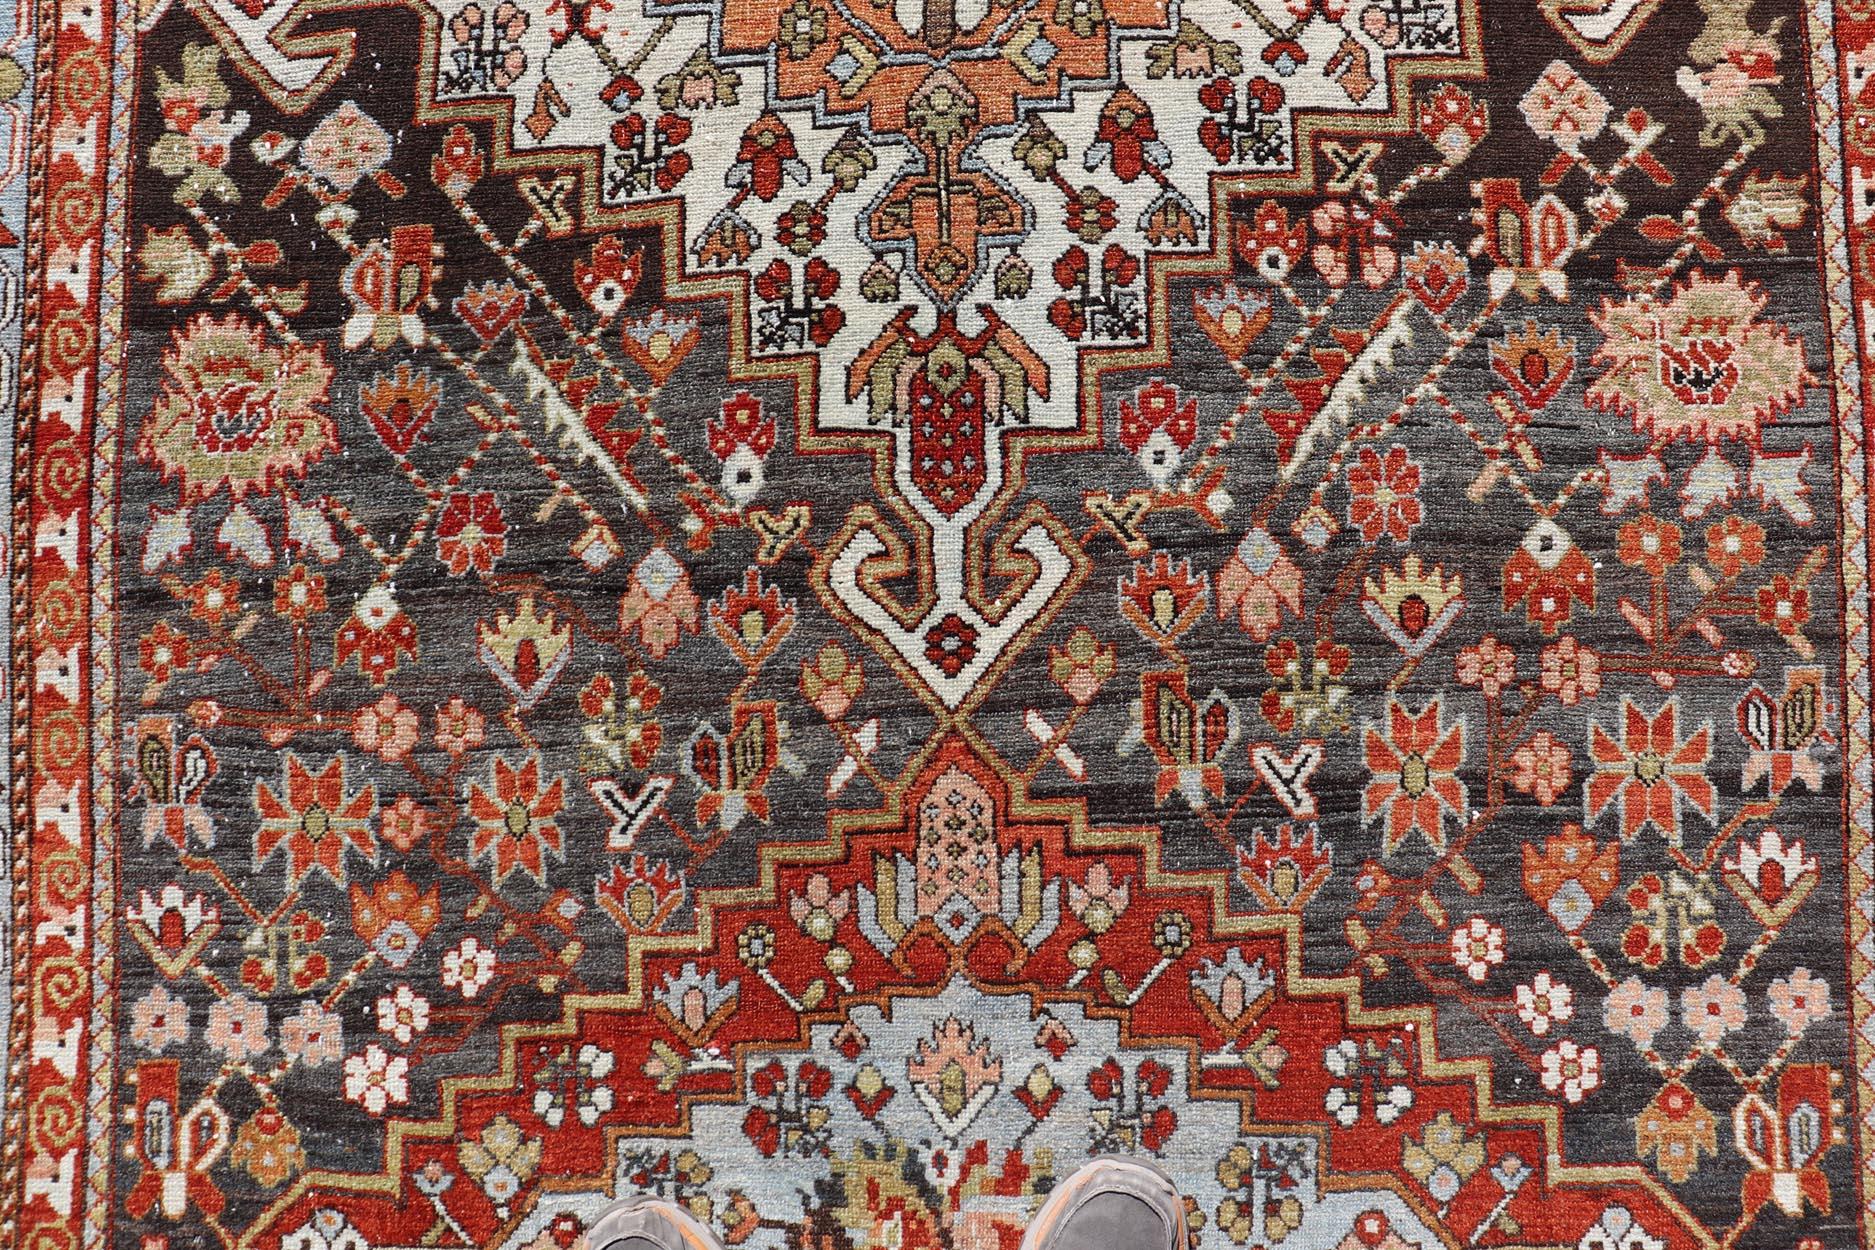 Antique Persian Tribal Design Bakhtiari Rug in Multi Colors By Keivan Woven Arts For Sale 1